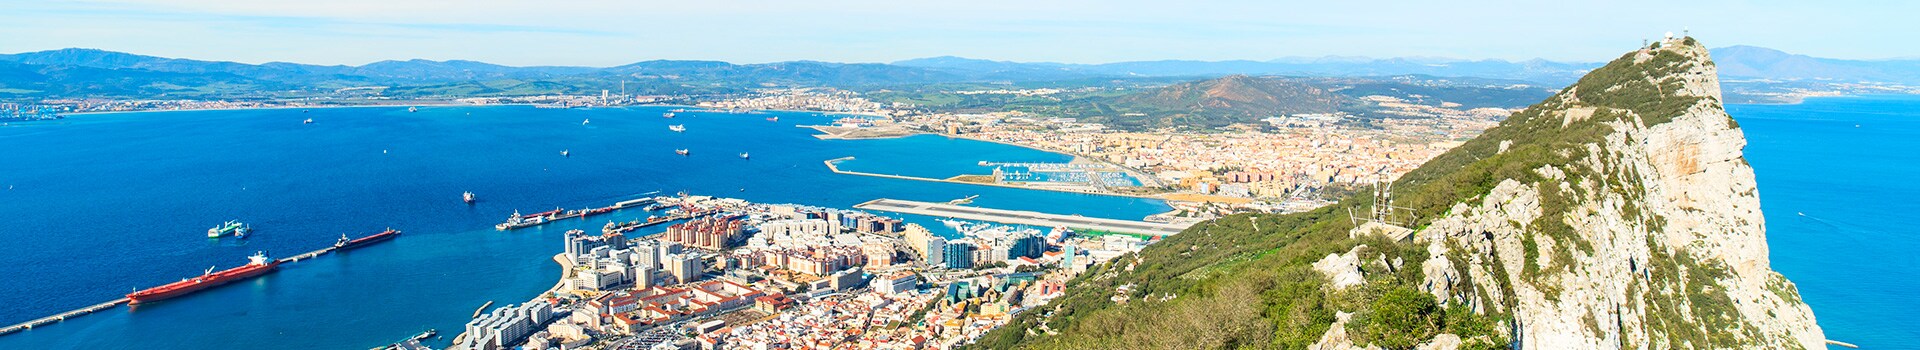 Teneriffa - Gibraltar